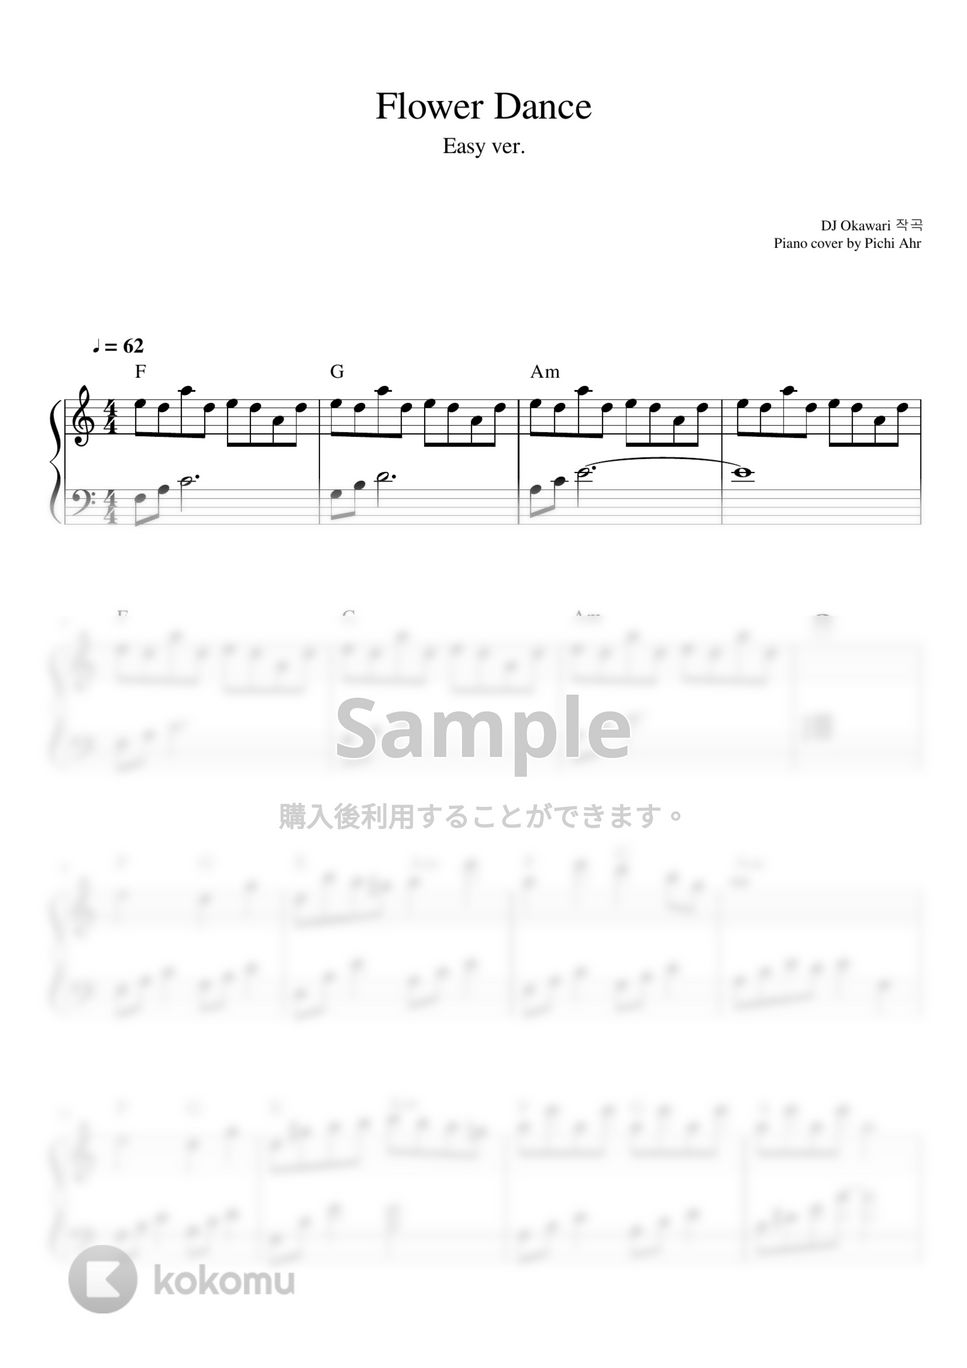 DJ Okawari - Flower Dance(フラワーダンス) (Easy ver.) by Pichi Ahr